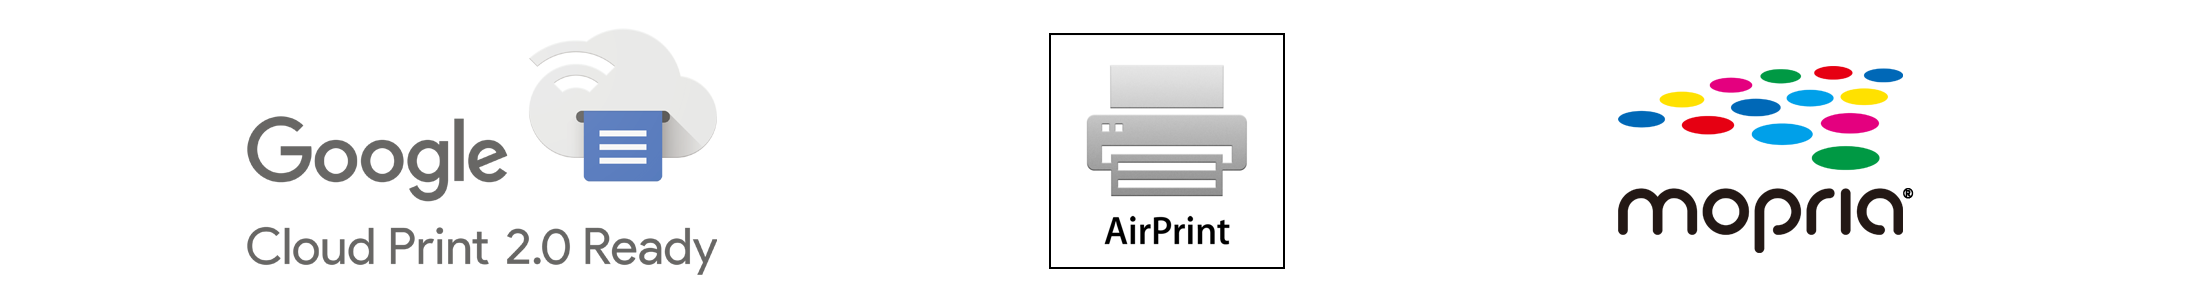 Google Cloud Print(TM) / AirPrint / Mopria(R)徽標